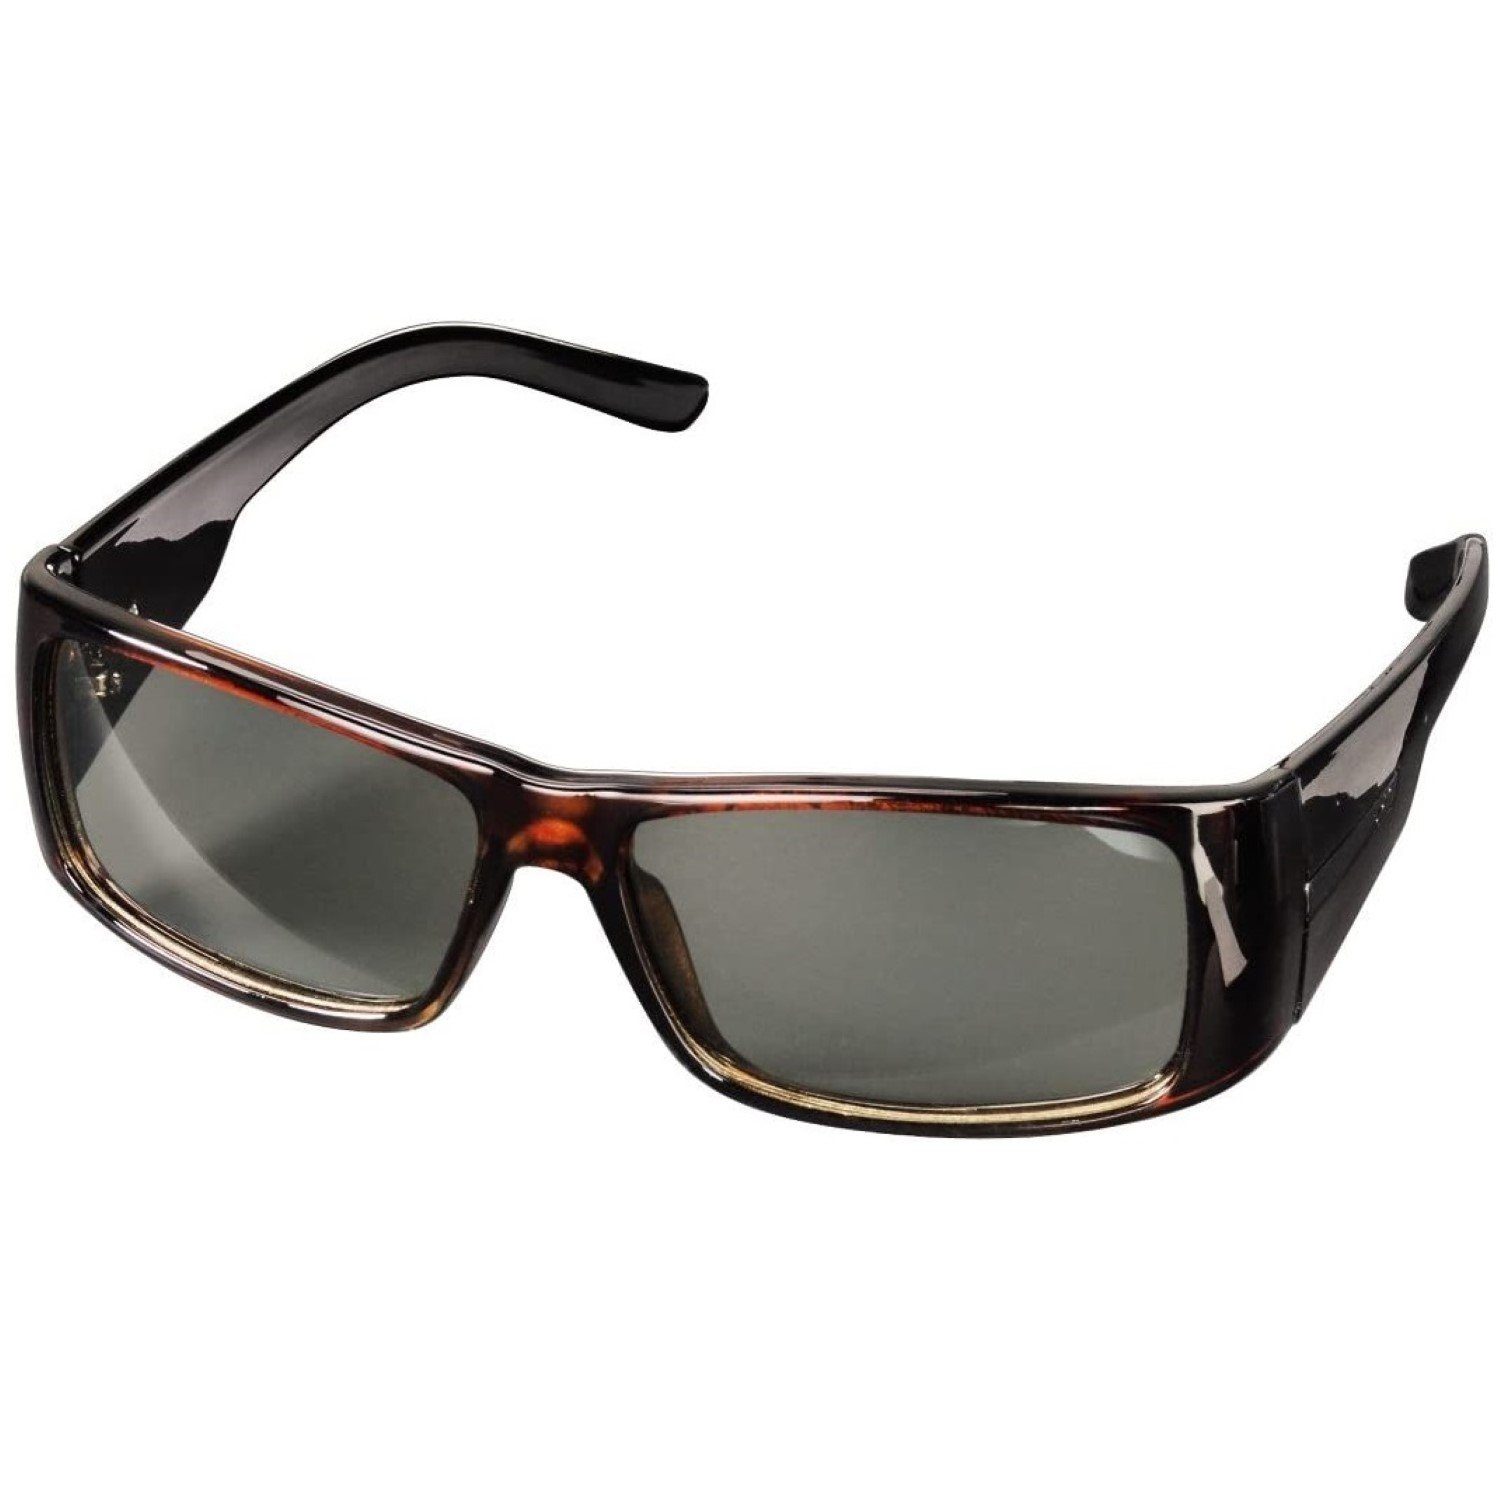 Hama 3D-Brille 3D Brille Passiv Polfilterbrille Unisex Braun, 3D-Technik Passiv Polarisation, Universell für 3D-TV Kino Beamer etc.